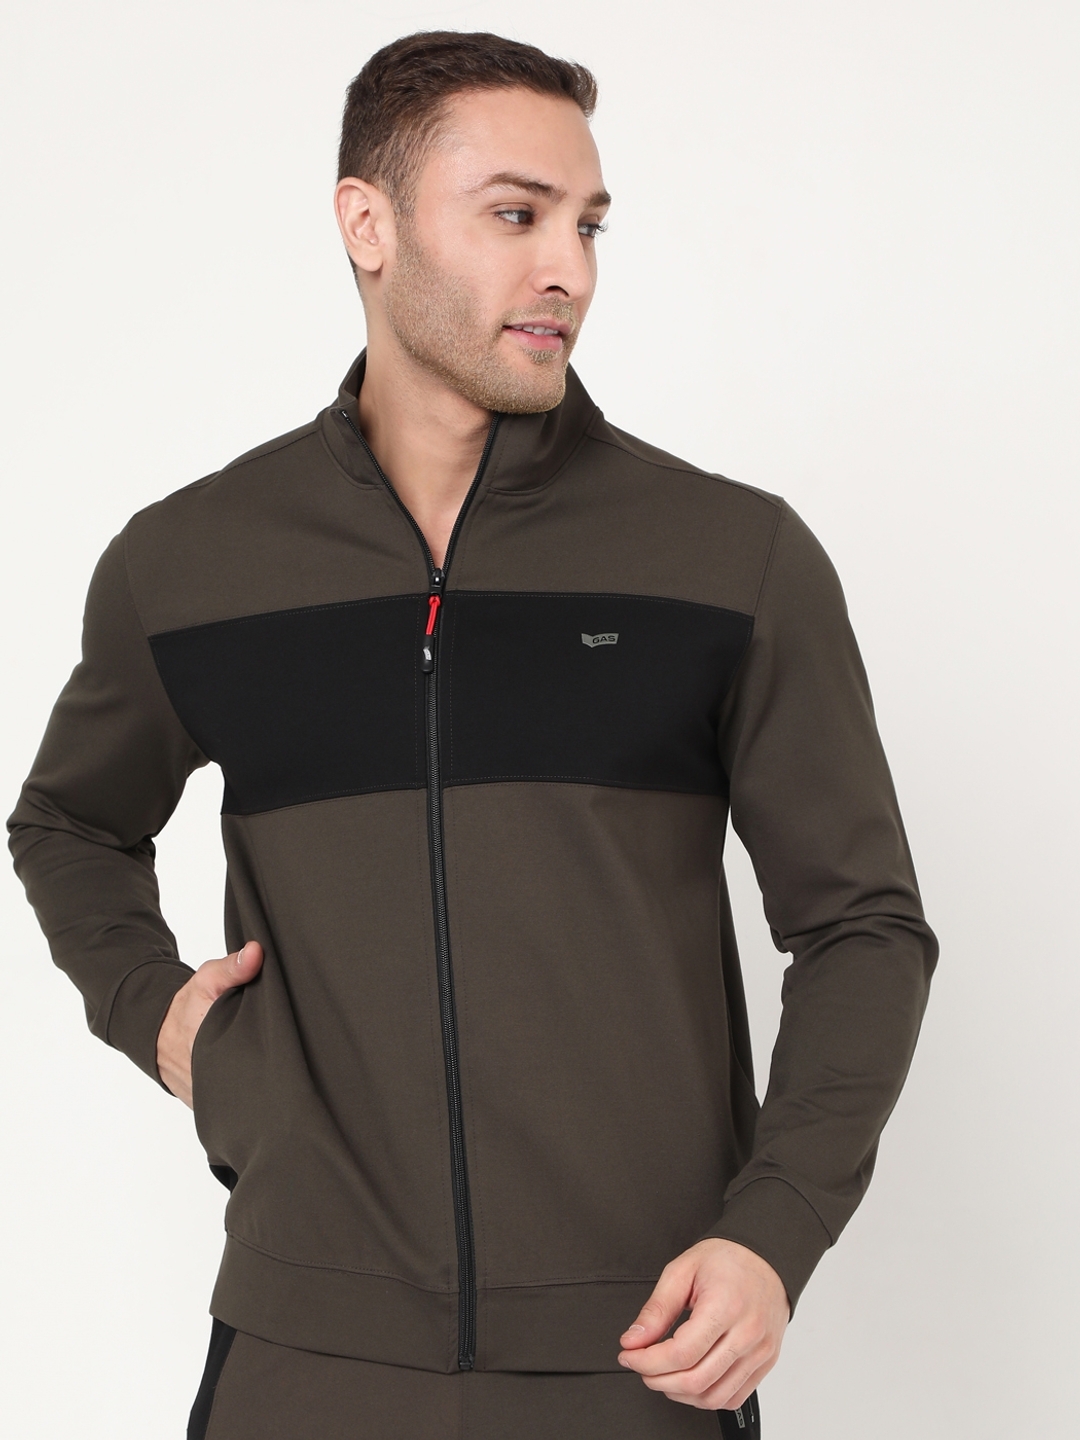 Zippo High-Neck Sweatshirt with Insert Pockets